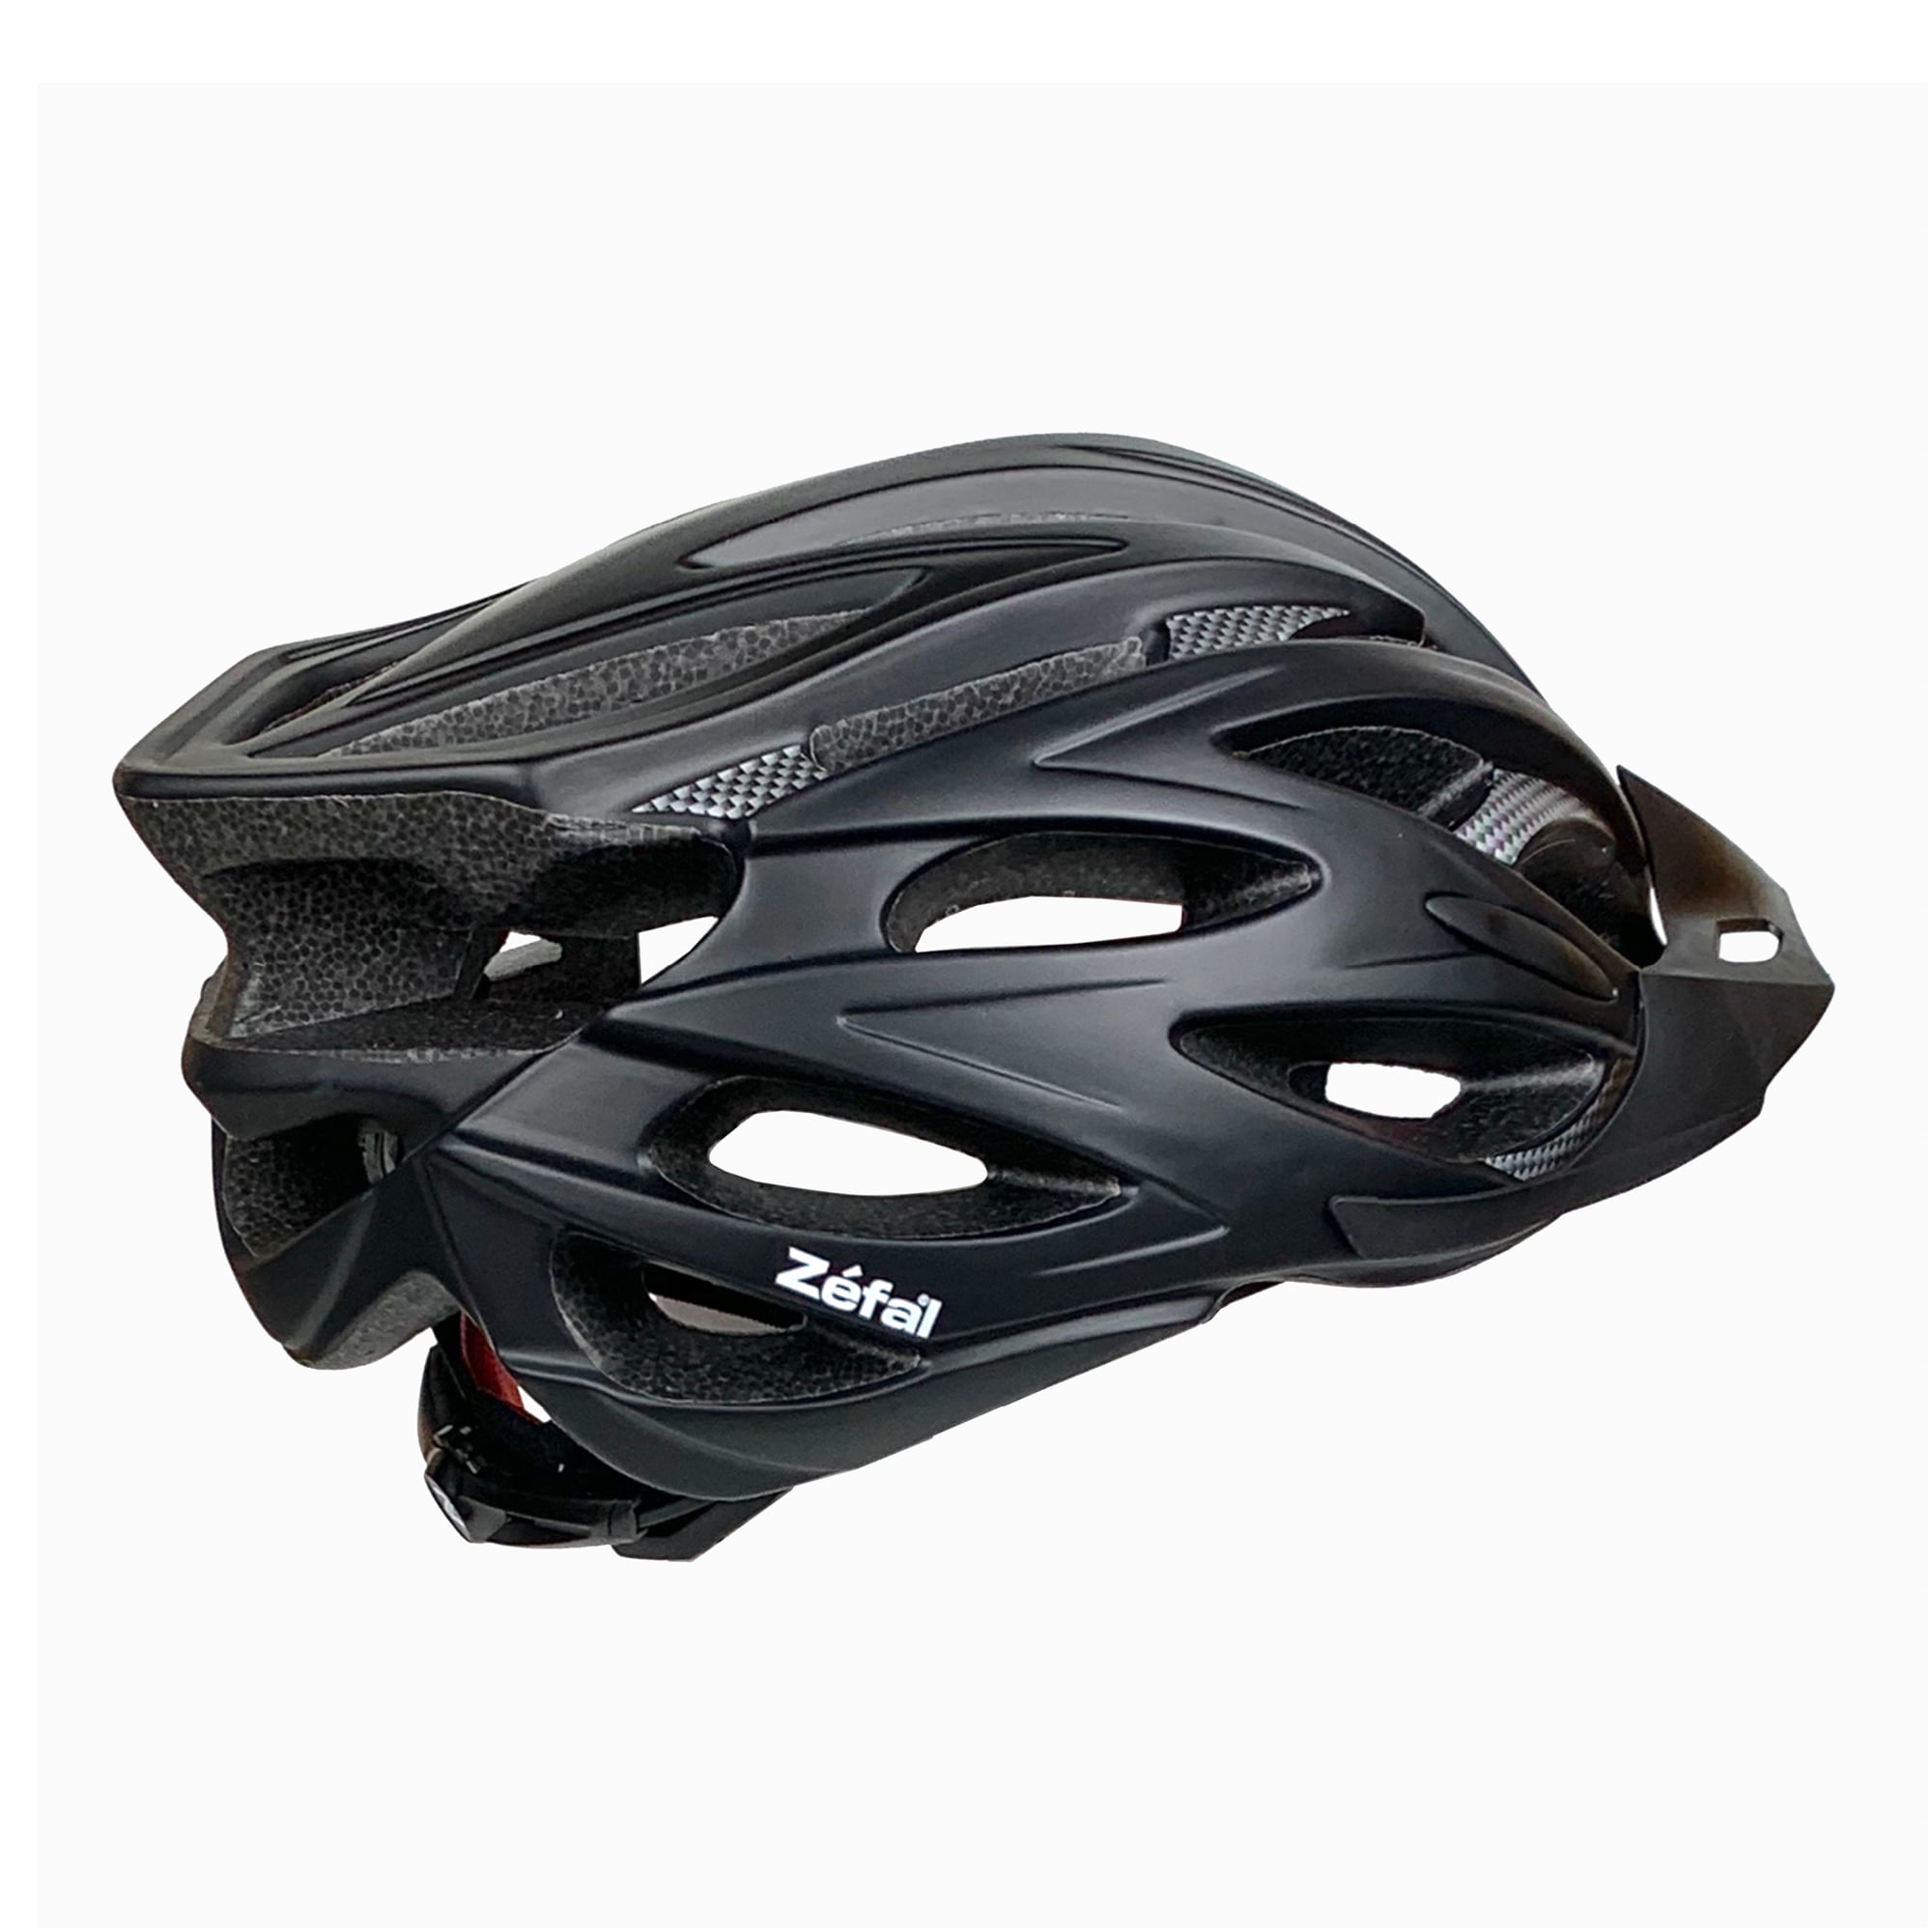 Thuisland advocaat Patriottisch Zefal Adult Black Bike Helmet (Universal Adjustment, 24 Vents, Ages 14+) -  Walmart.com